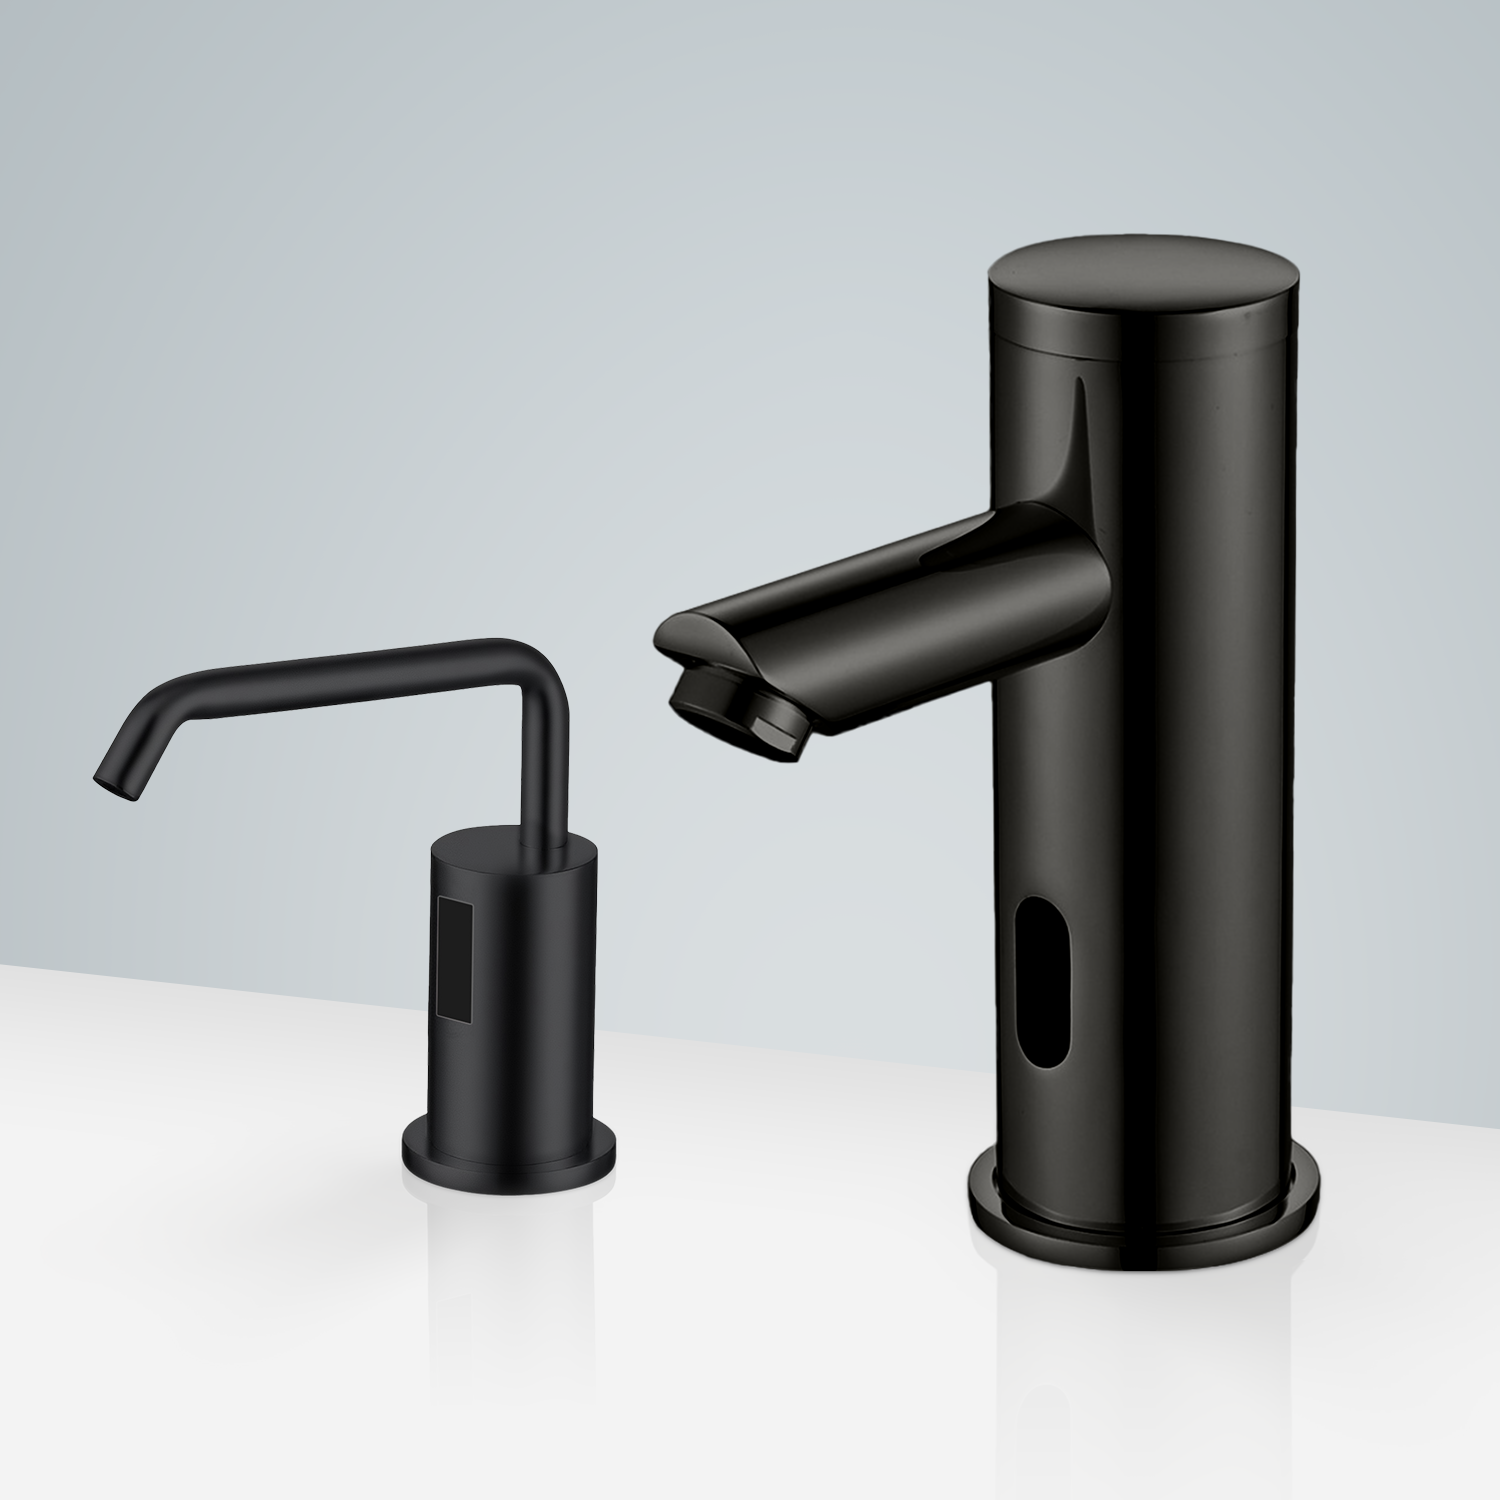 Fontana Sénart Commercial Automatic Motion Sensor Faucet & Automatic Deck Mount Sensor Liquid Soap Dispenser For Restrooms In Oil Rubbed Bronze Finish